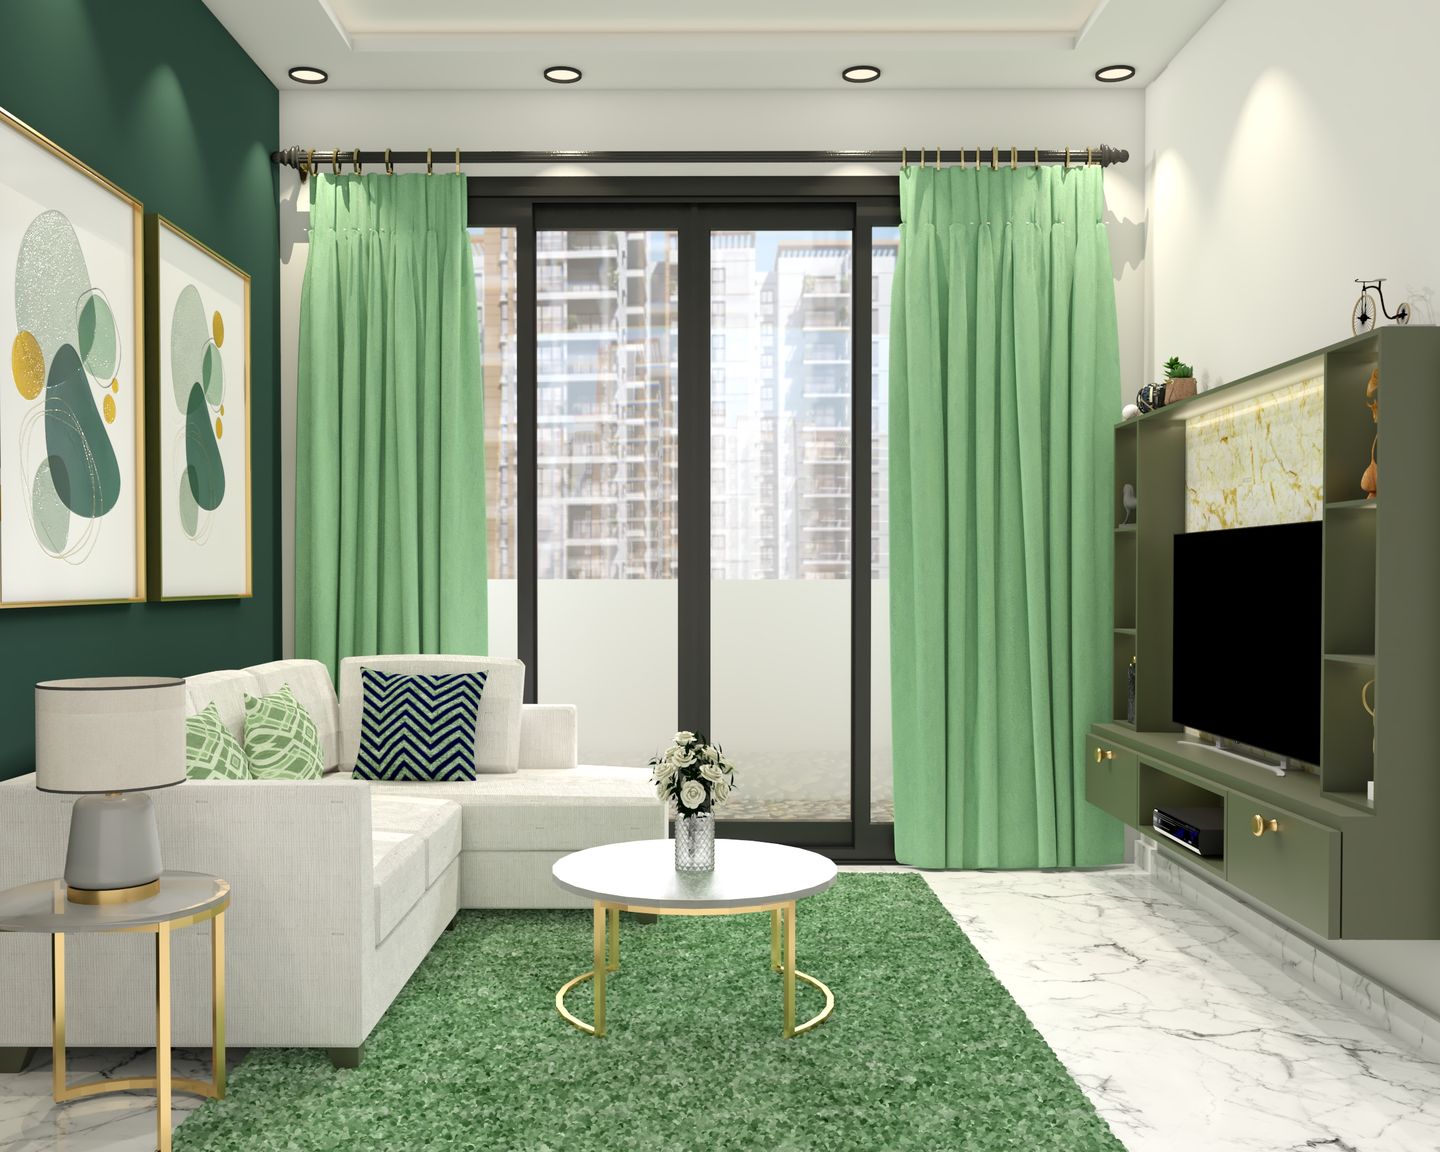 Living Room Design For Rental Homes - Livspace